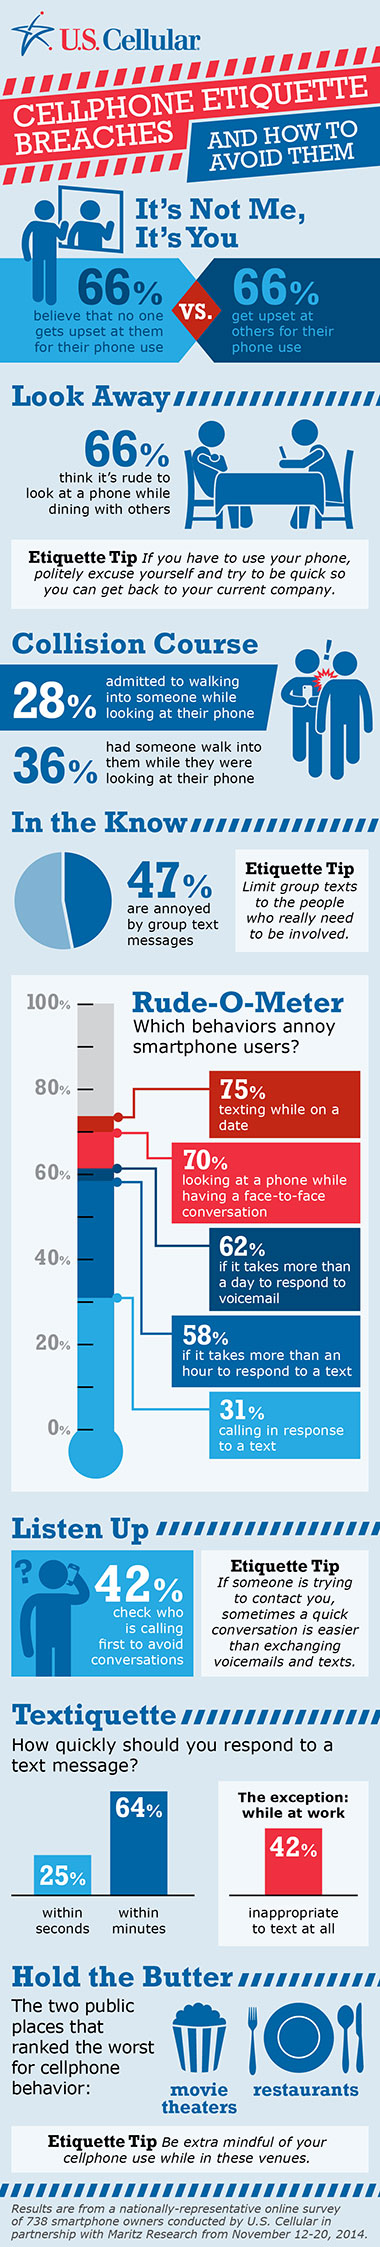 Cellphone etiquette infographic